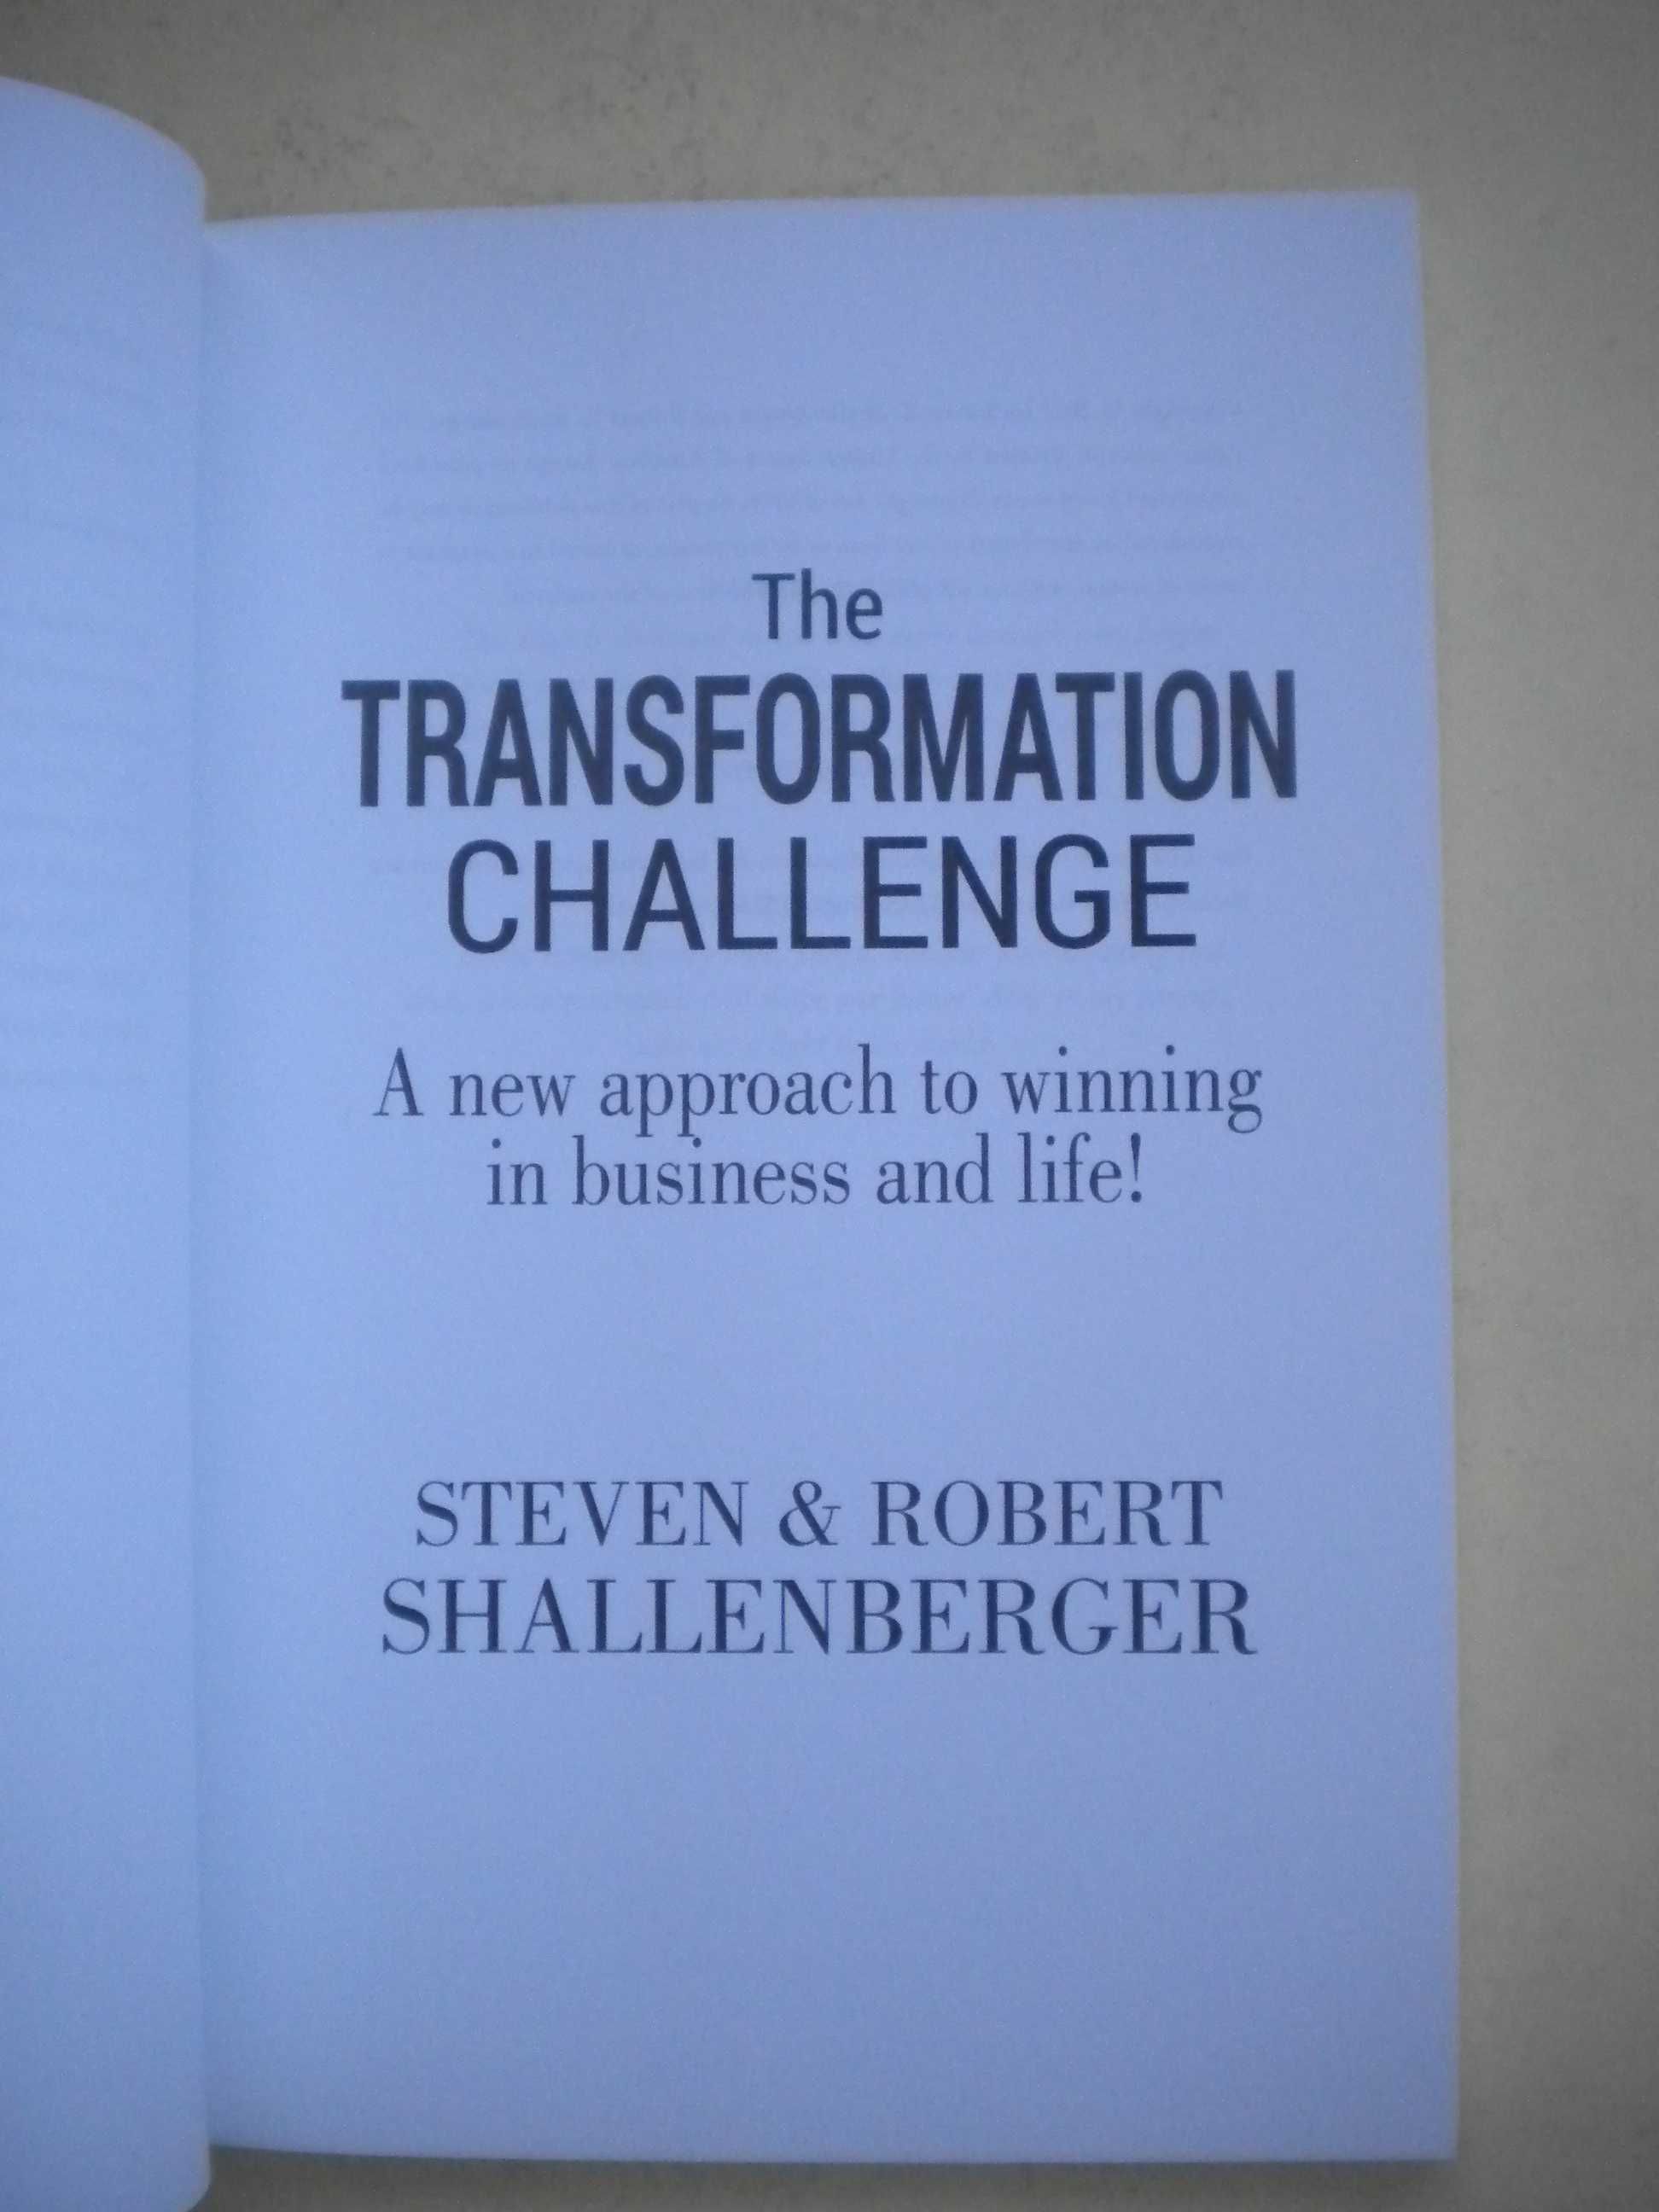 The Transformation Challenge
de Steven & Robert Shallenberger